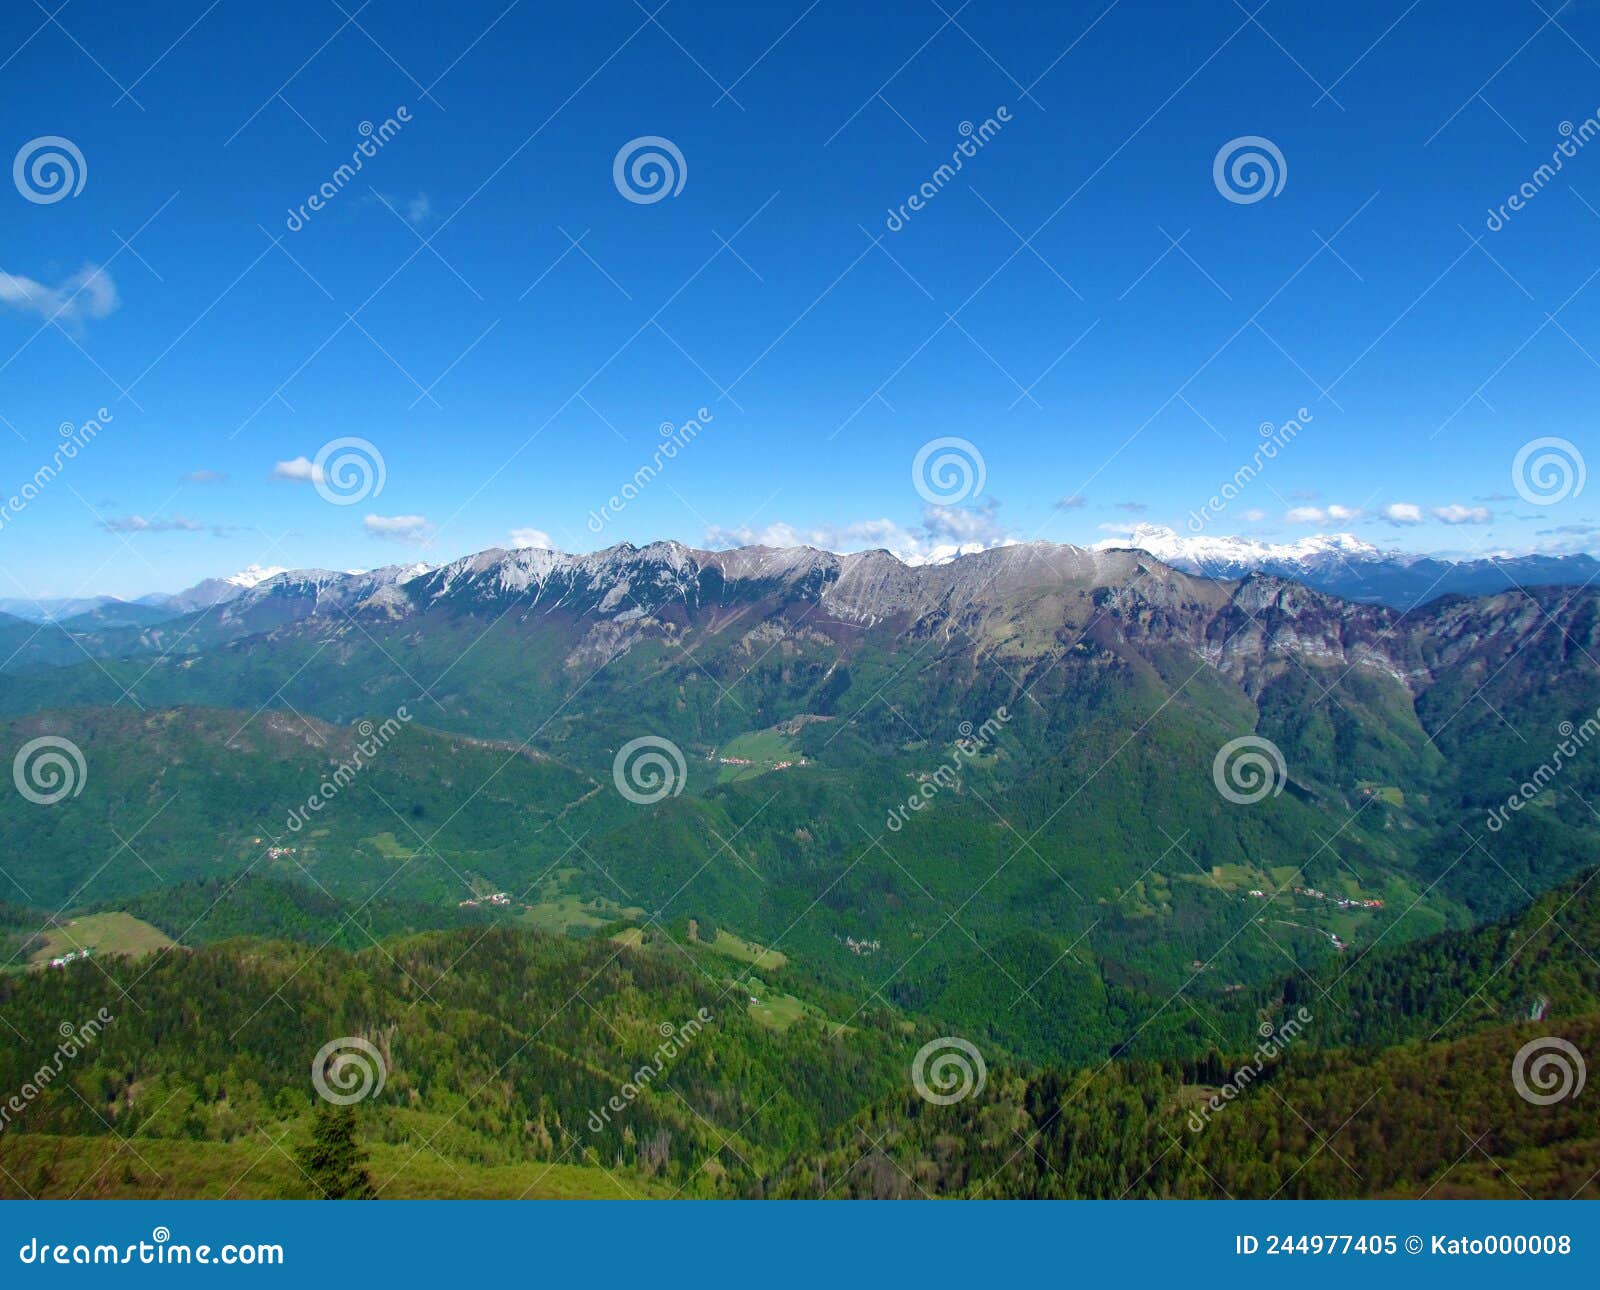 view of a mountain range in julian alps in gorenjska, slovenia above baska grapa